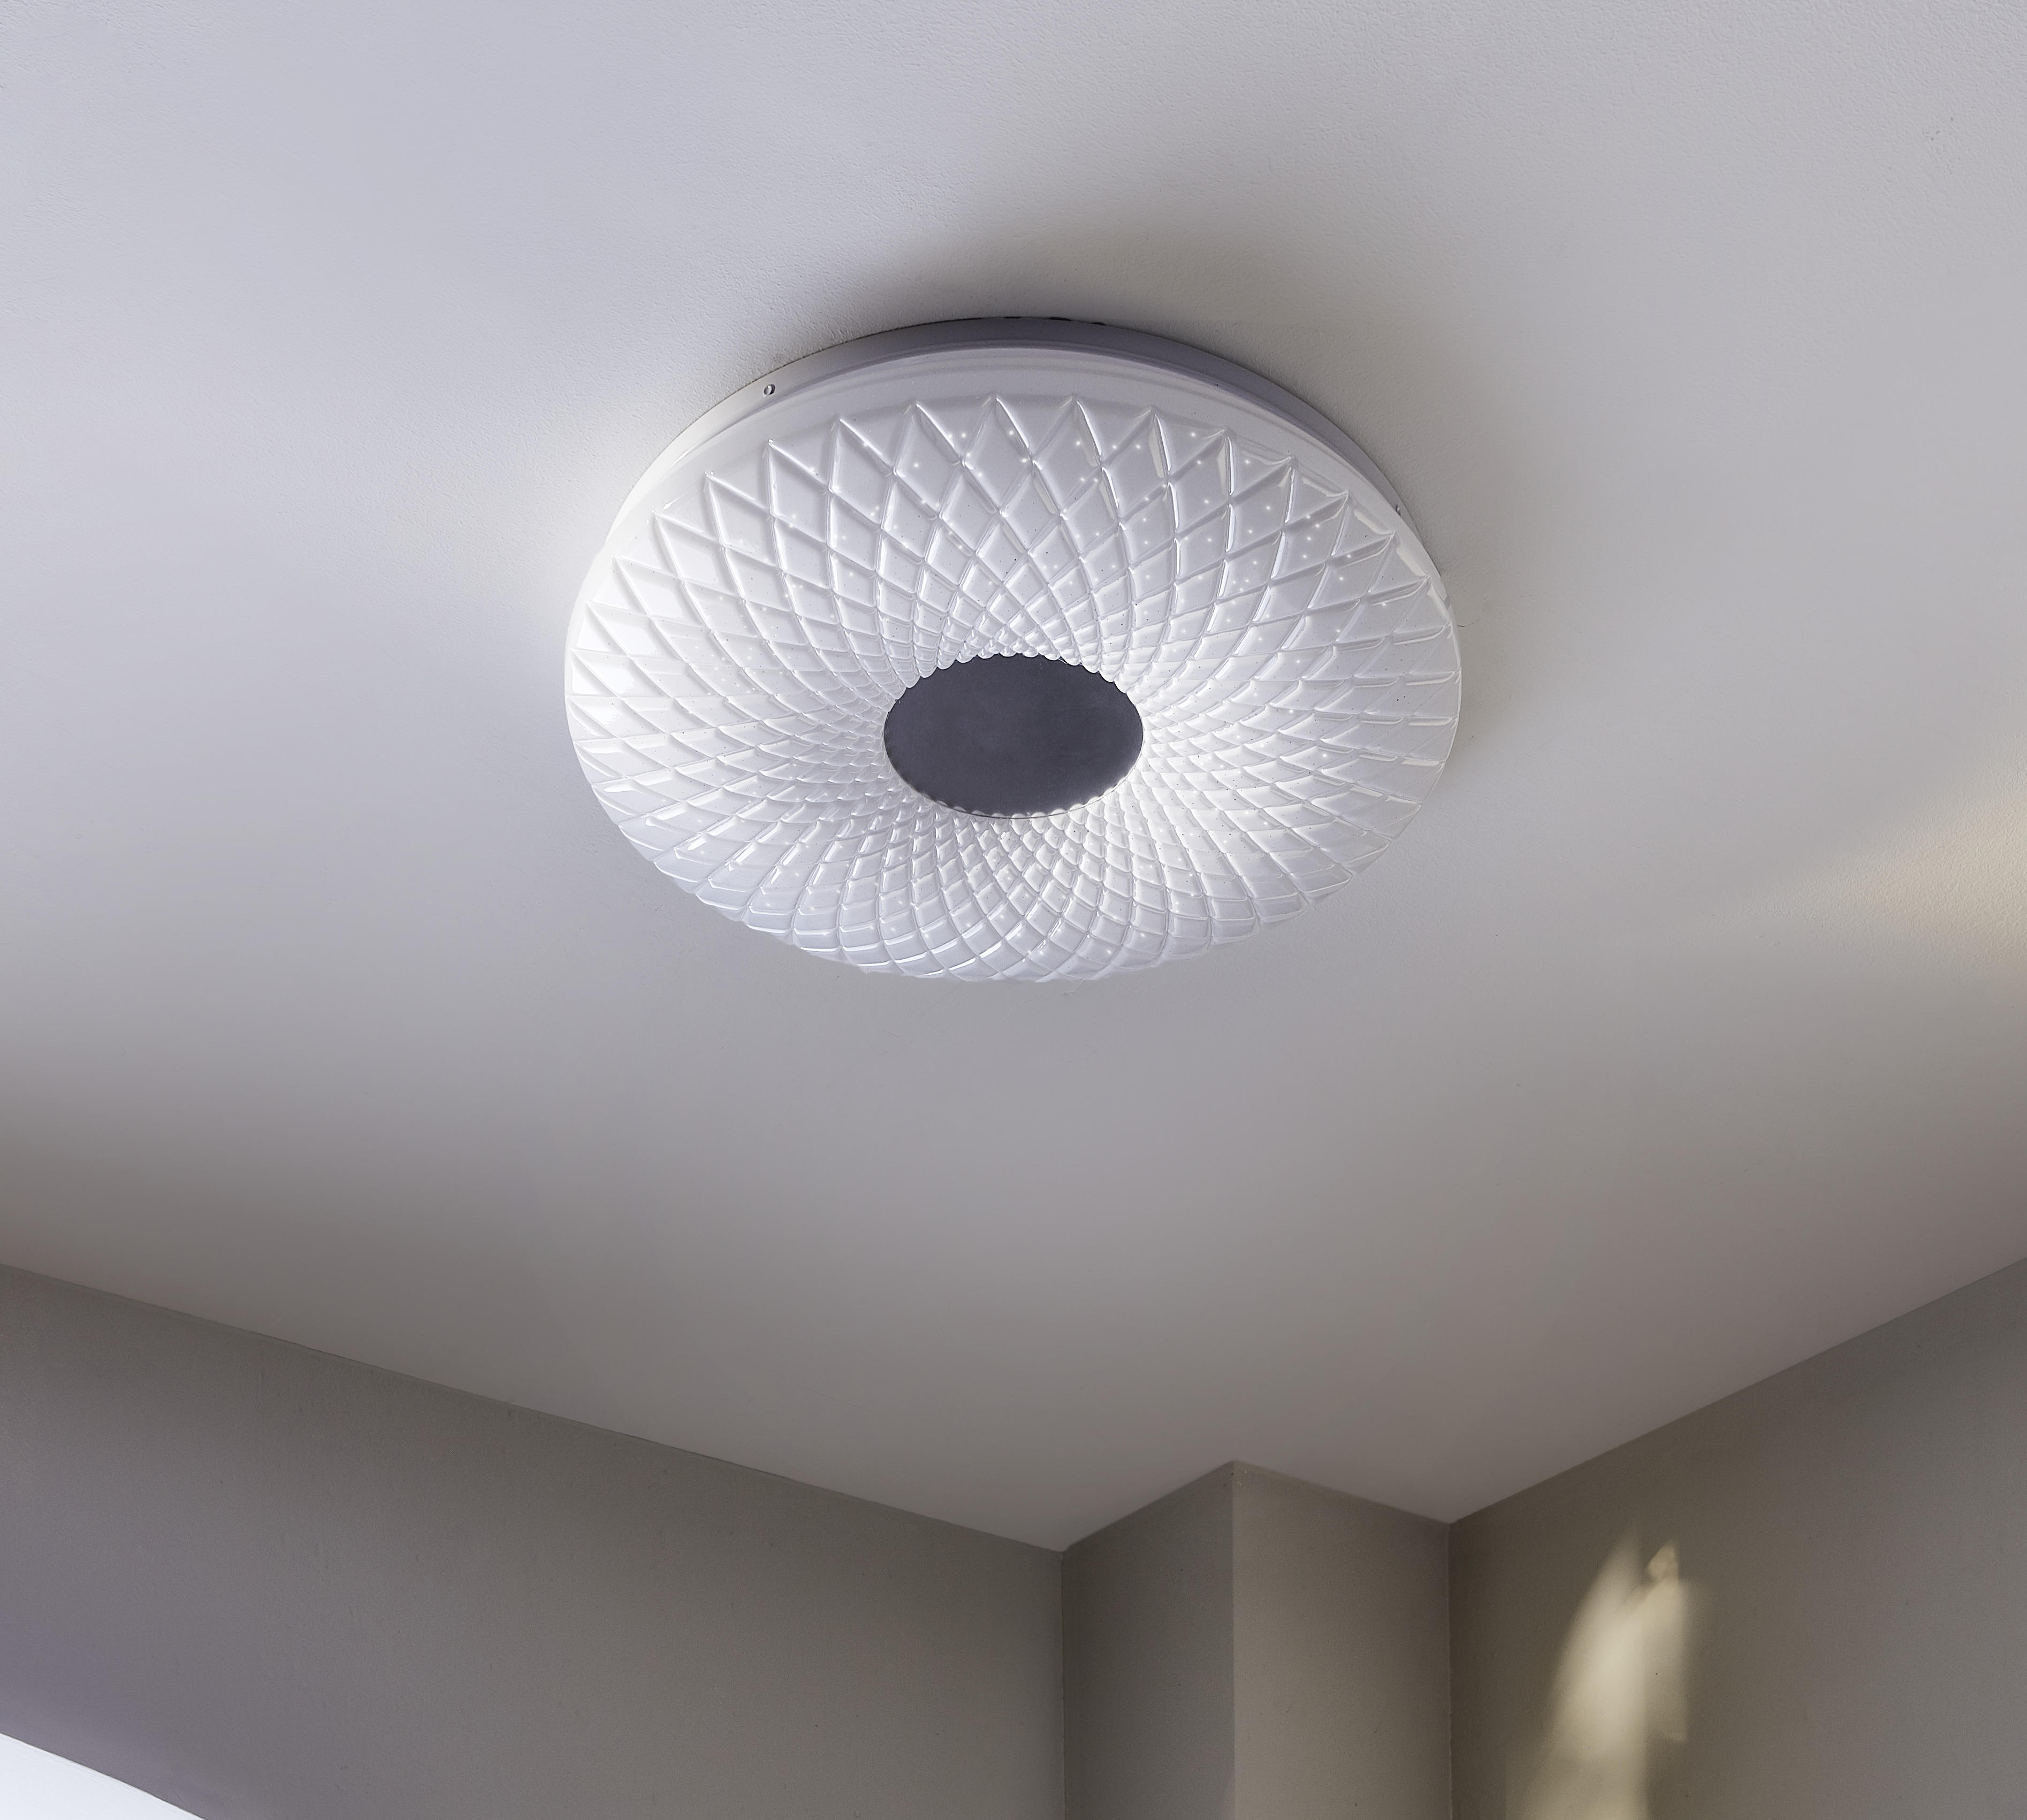 LED STROPNÁ LAMPA, 48/6,5 cm  - biela, Lifestyle, kov/plast (48/6,5cm) - Xora